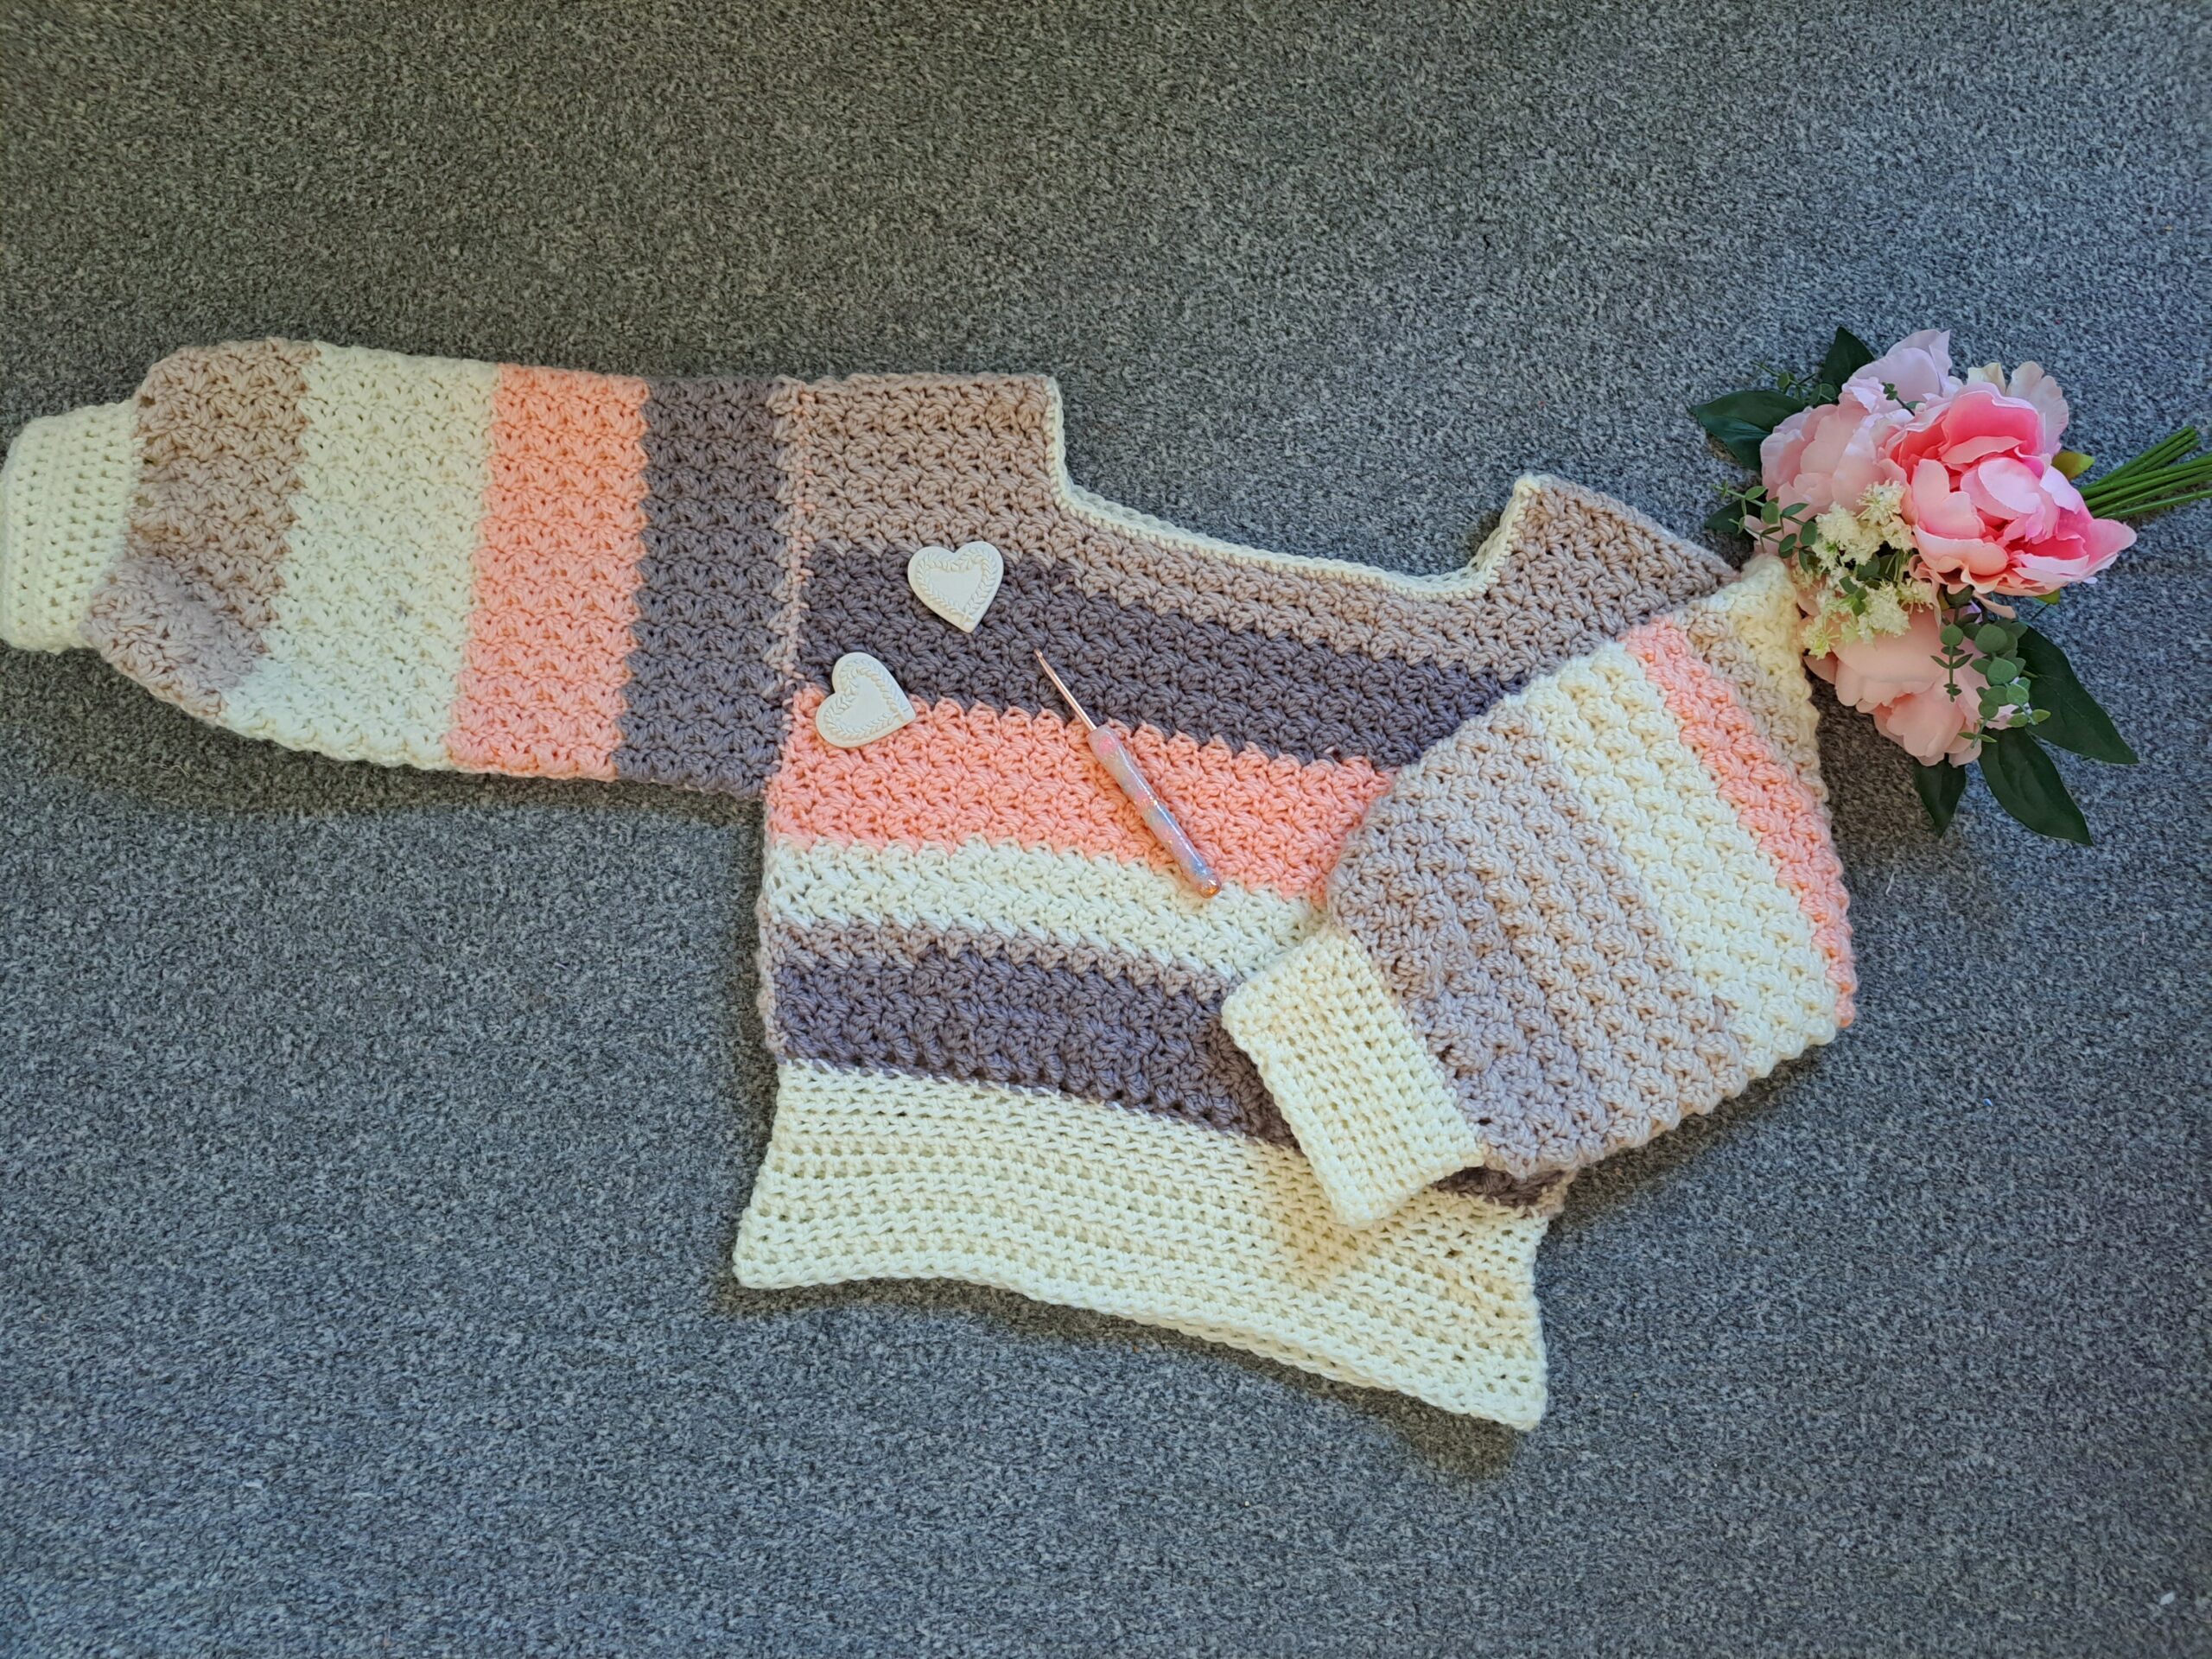 Crochet Solange Cropped Sweater Free Pattern